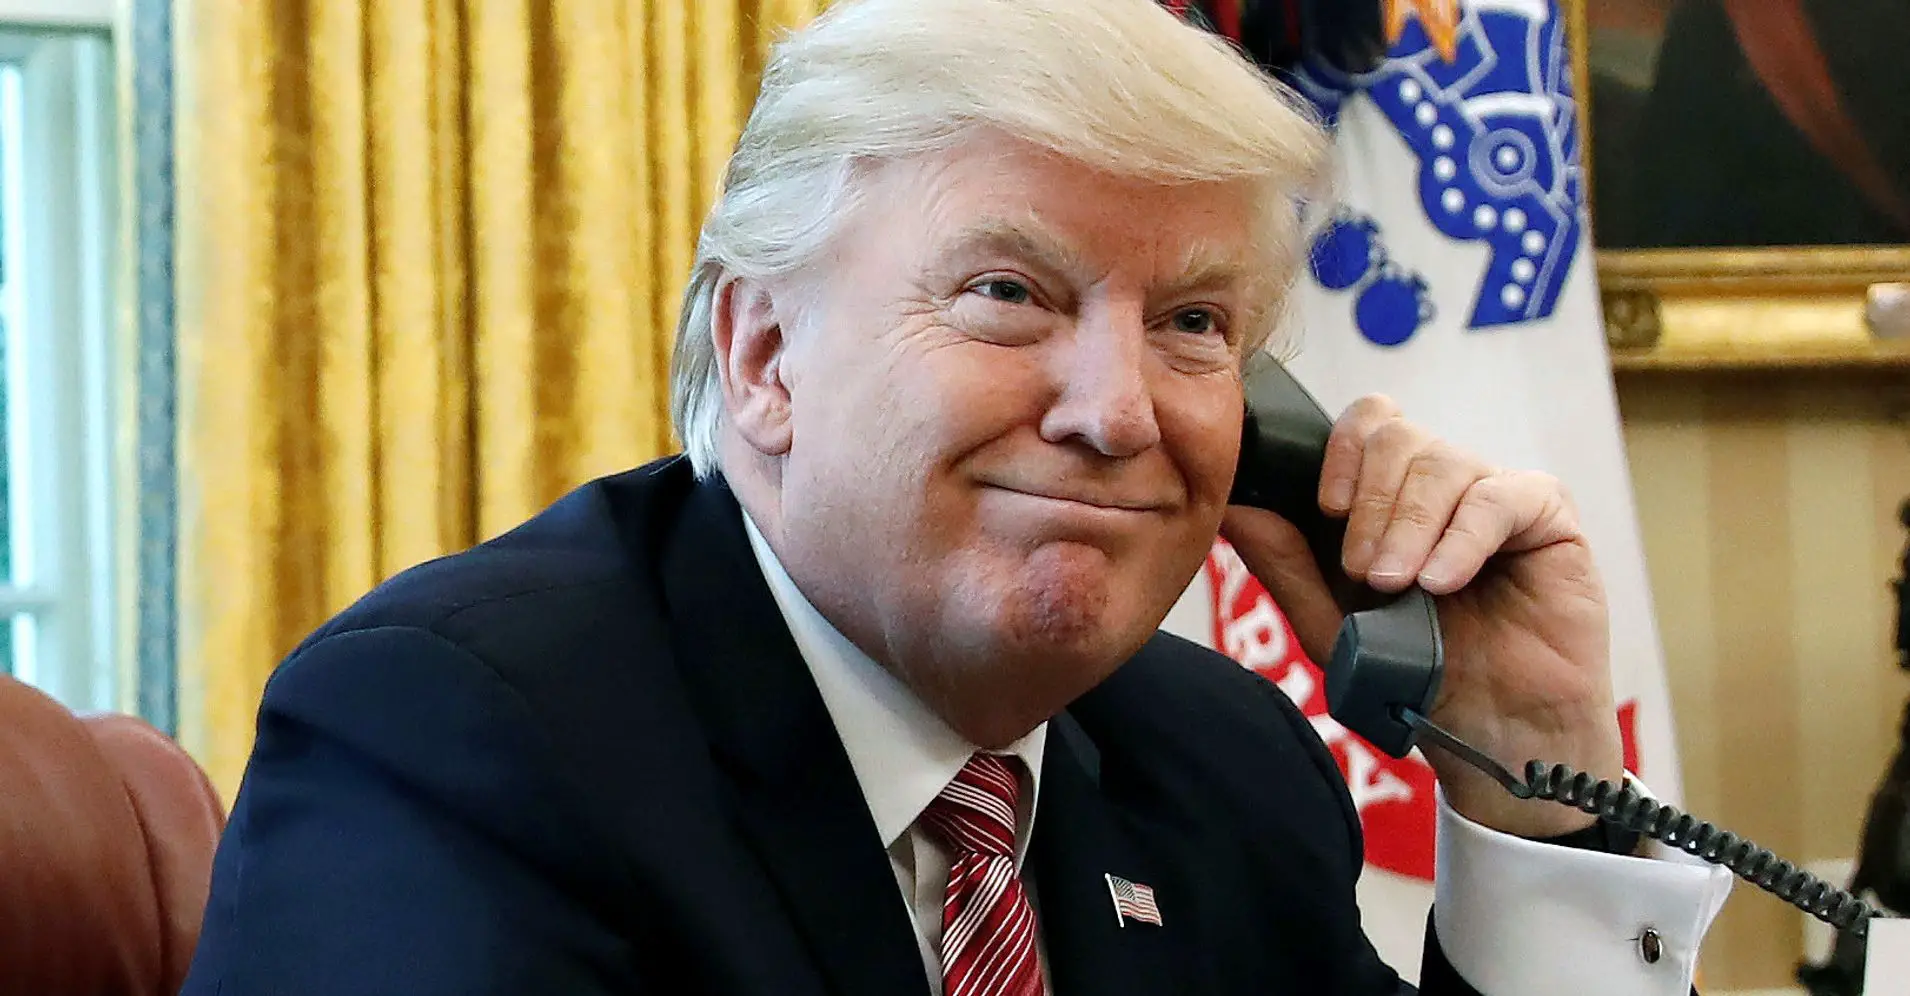 Donald Trump Just Had The Weirdest Phone Call With Ireland